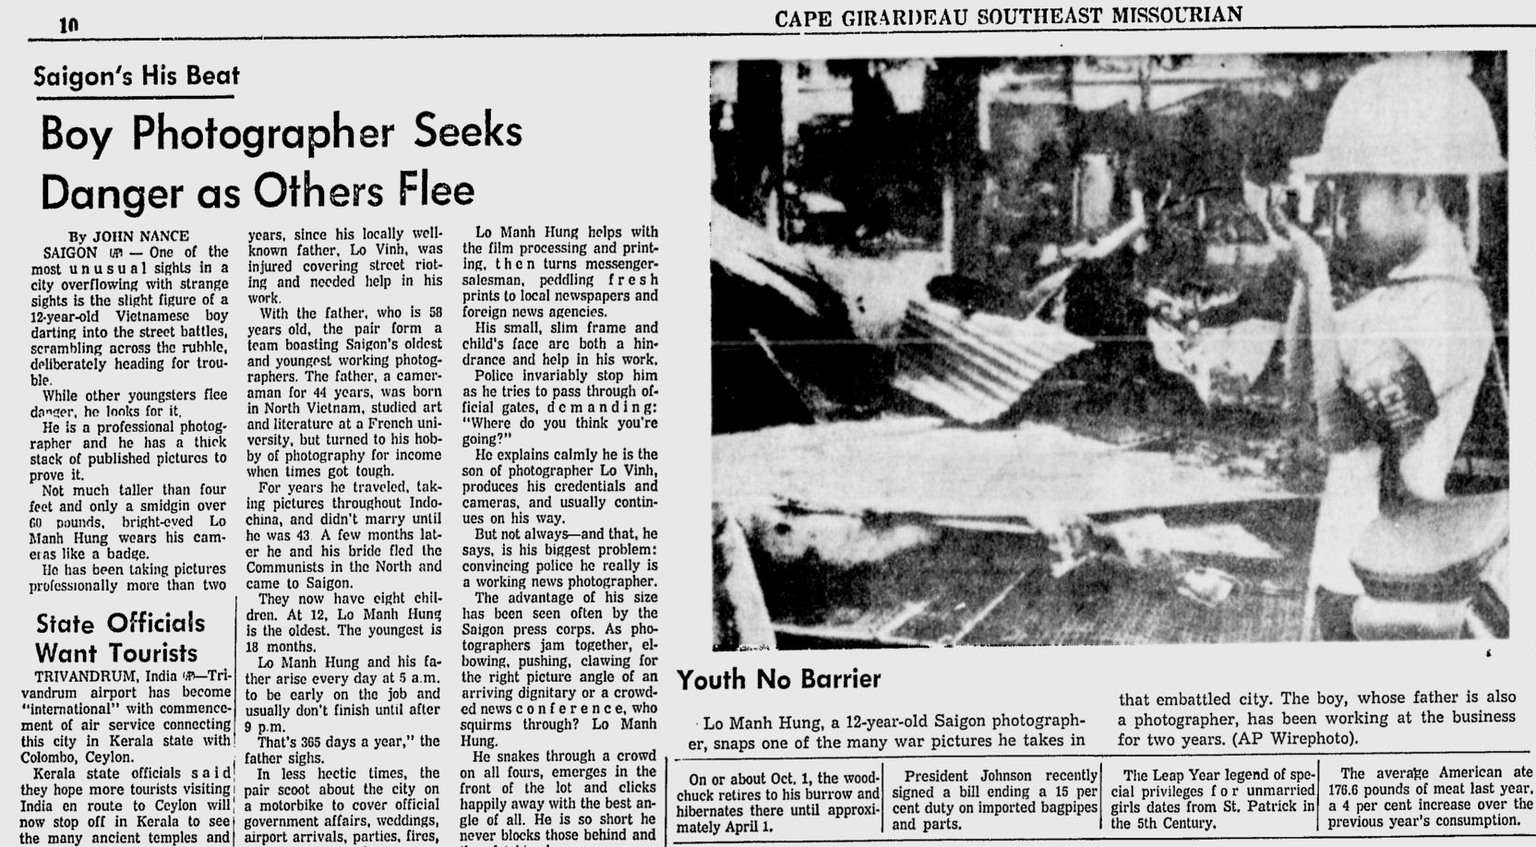 Zeitungsartikel über Lo Manh Hung in The Southeast Missourian, 14. Februar 1968.